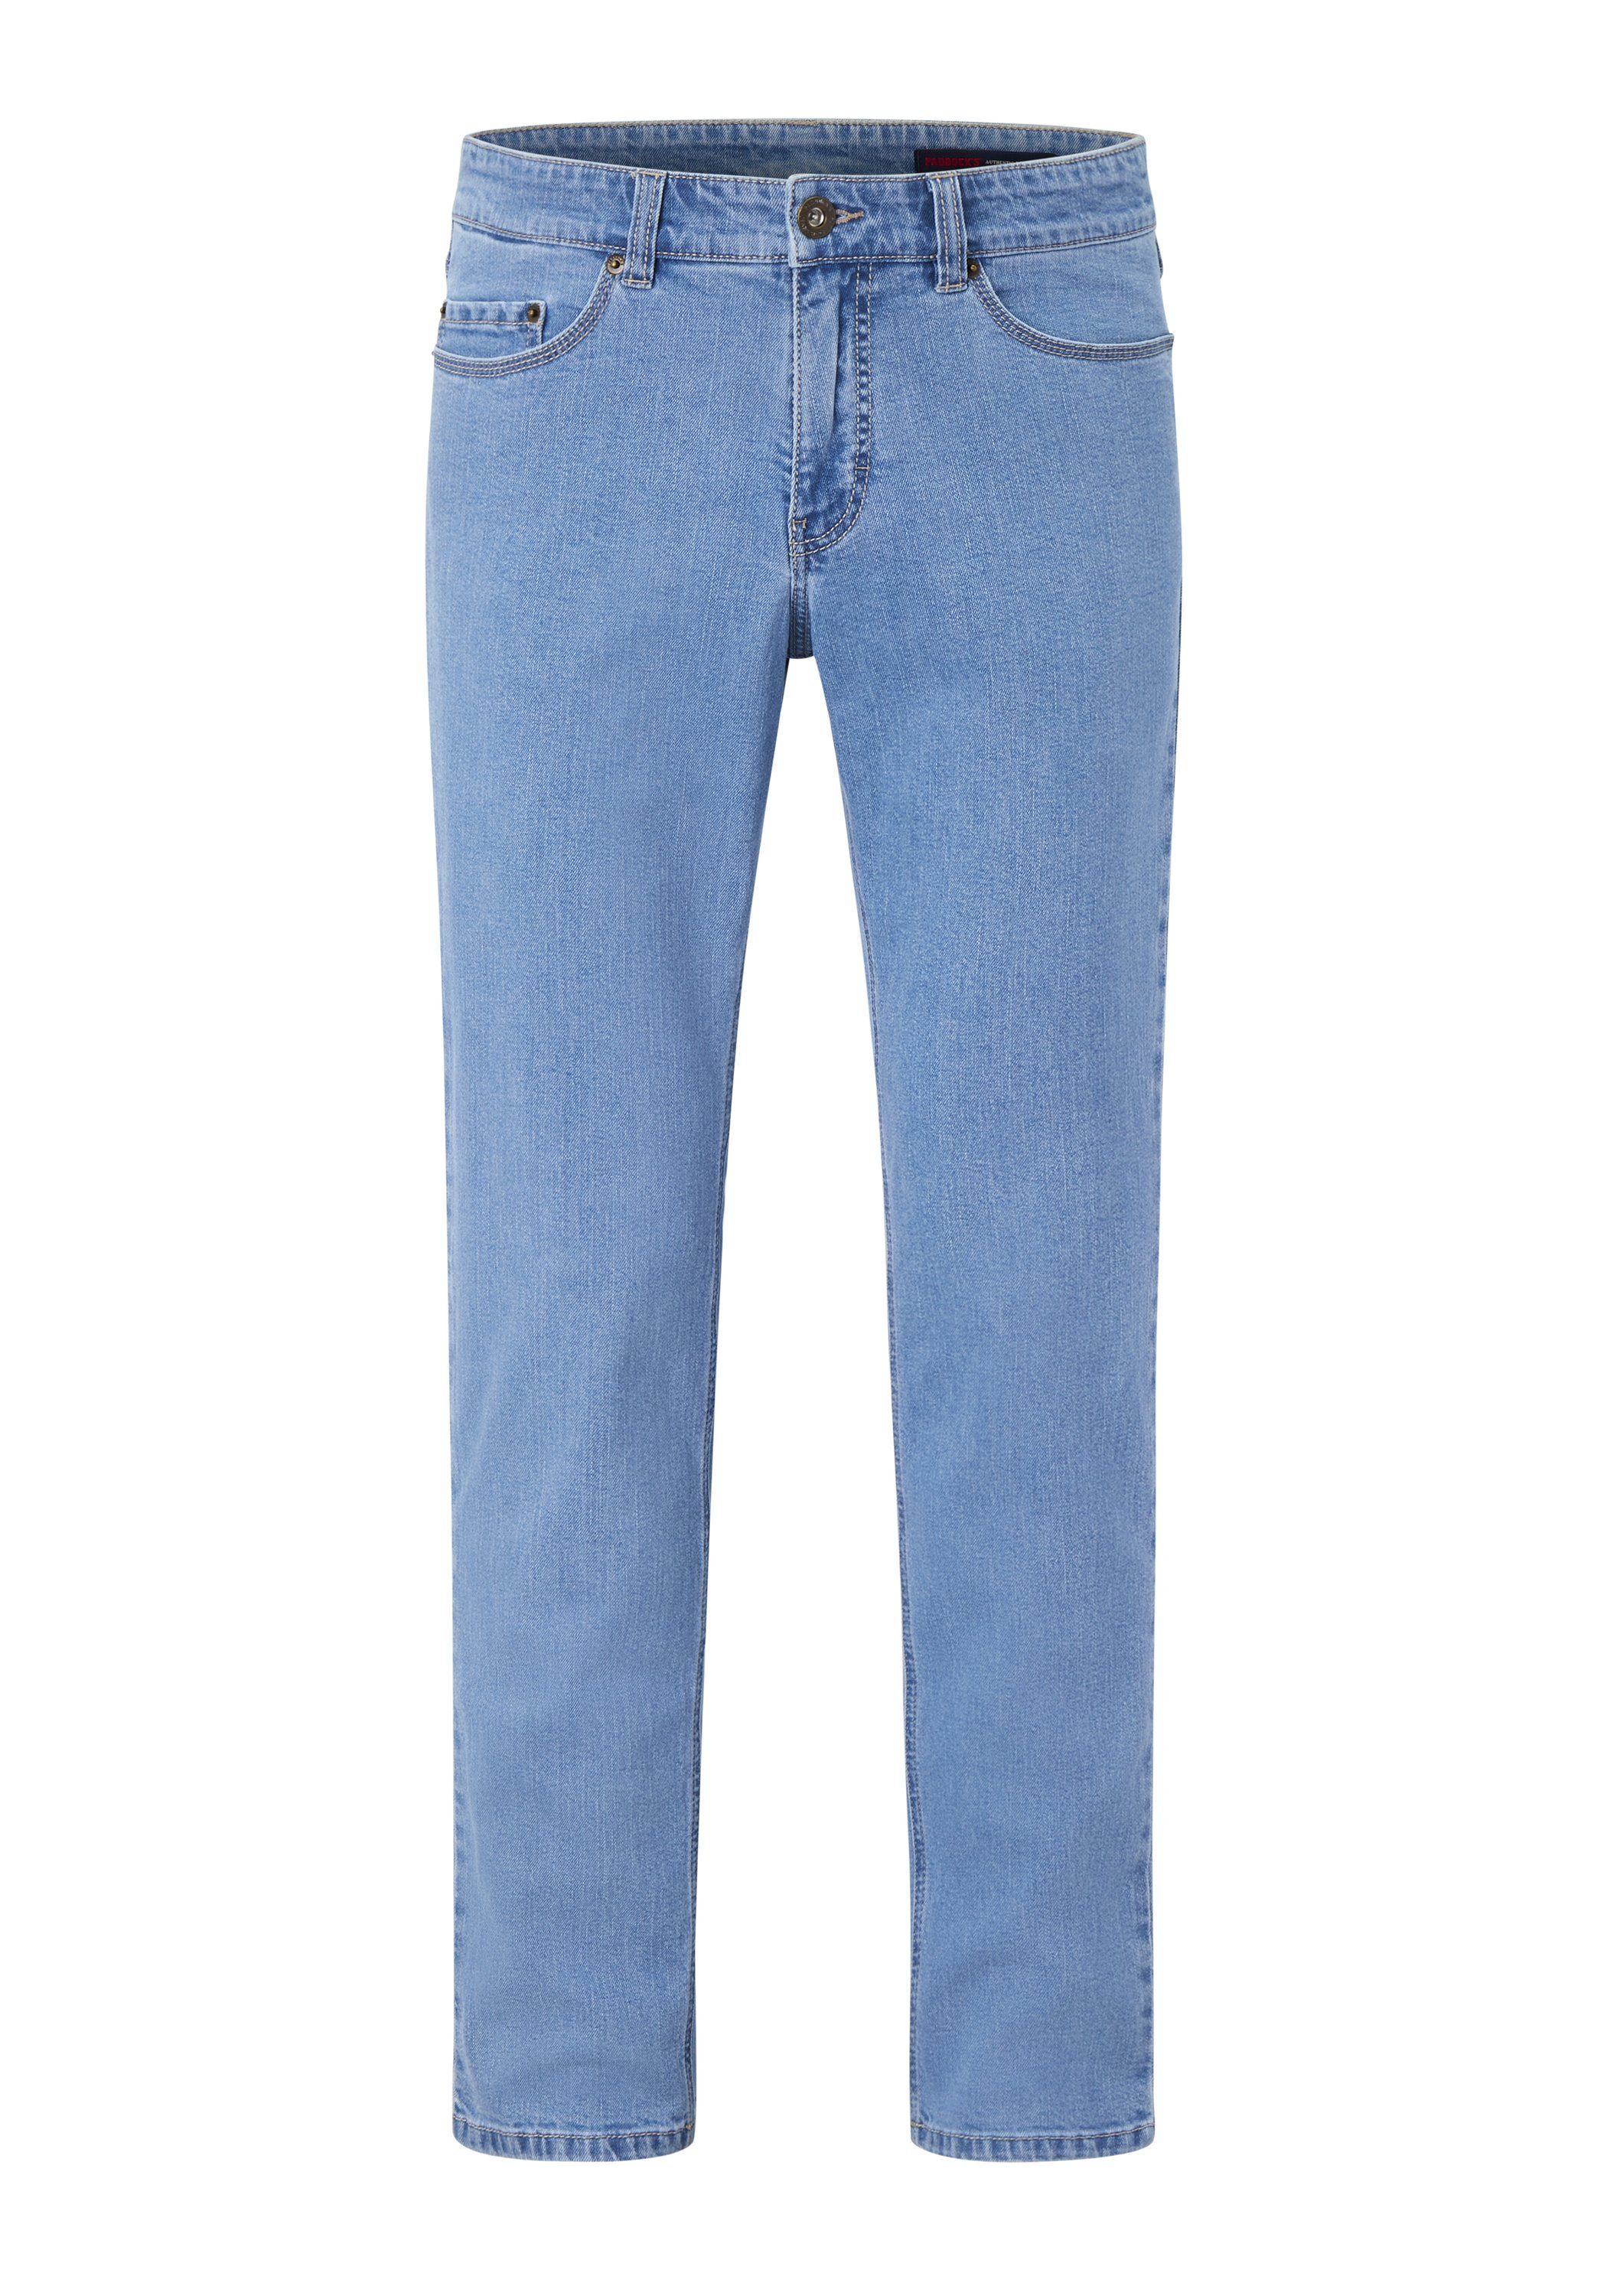 PIPE PIPE Slim-fit-Jeans Slim-Fit Jeans light Elastische blue Paddock's